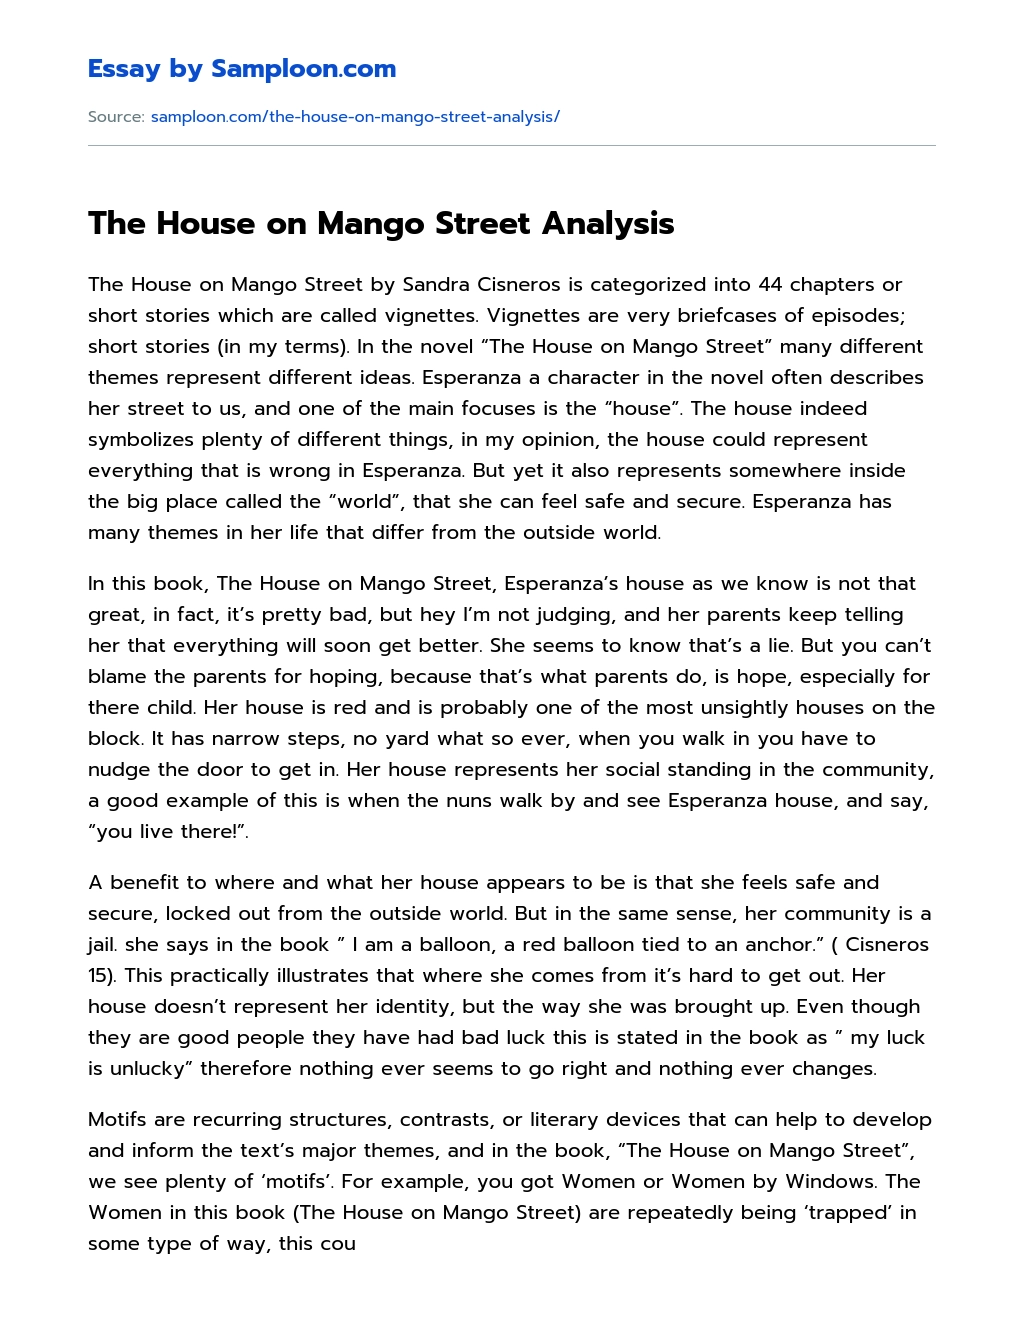 The House on Mango Street Analysis essay